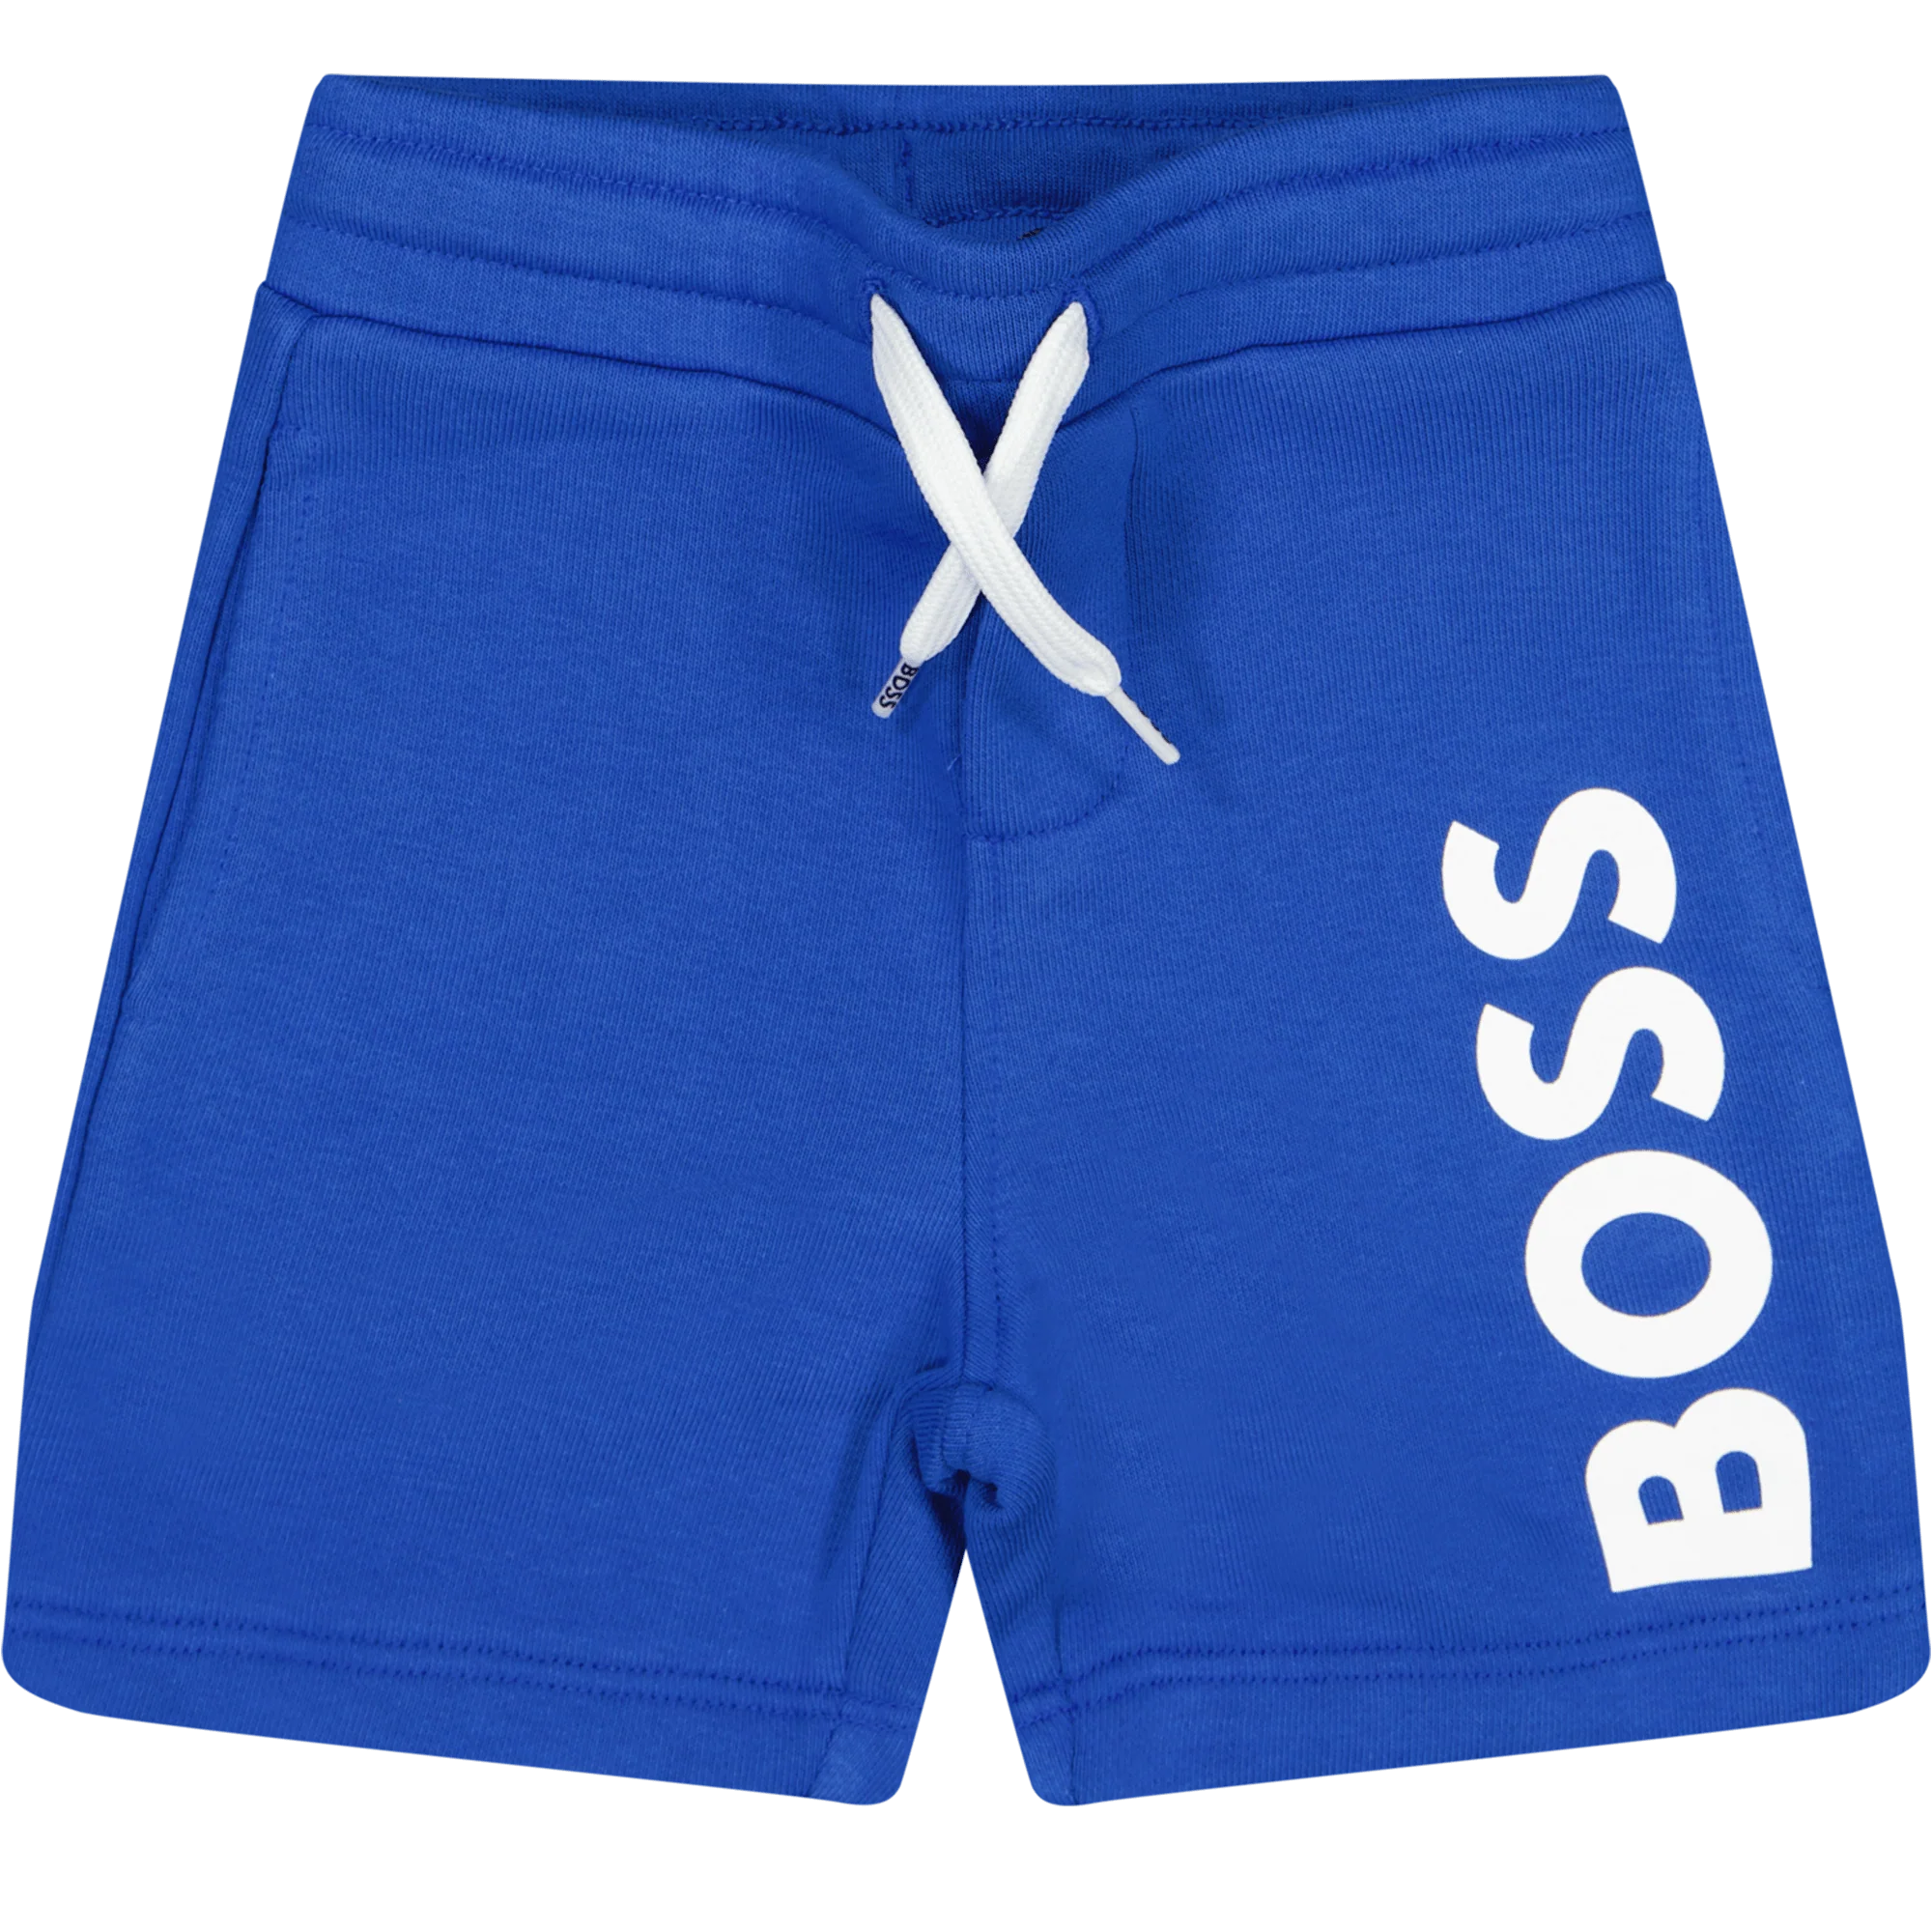 Hugo Boss Baby jongens shorts